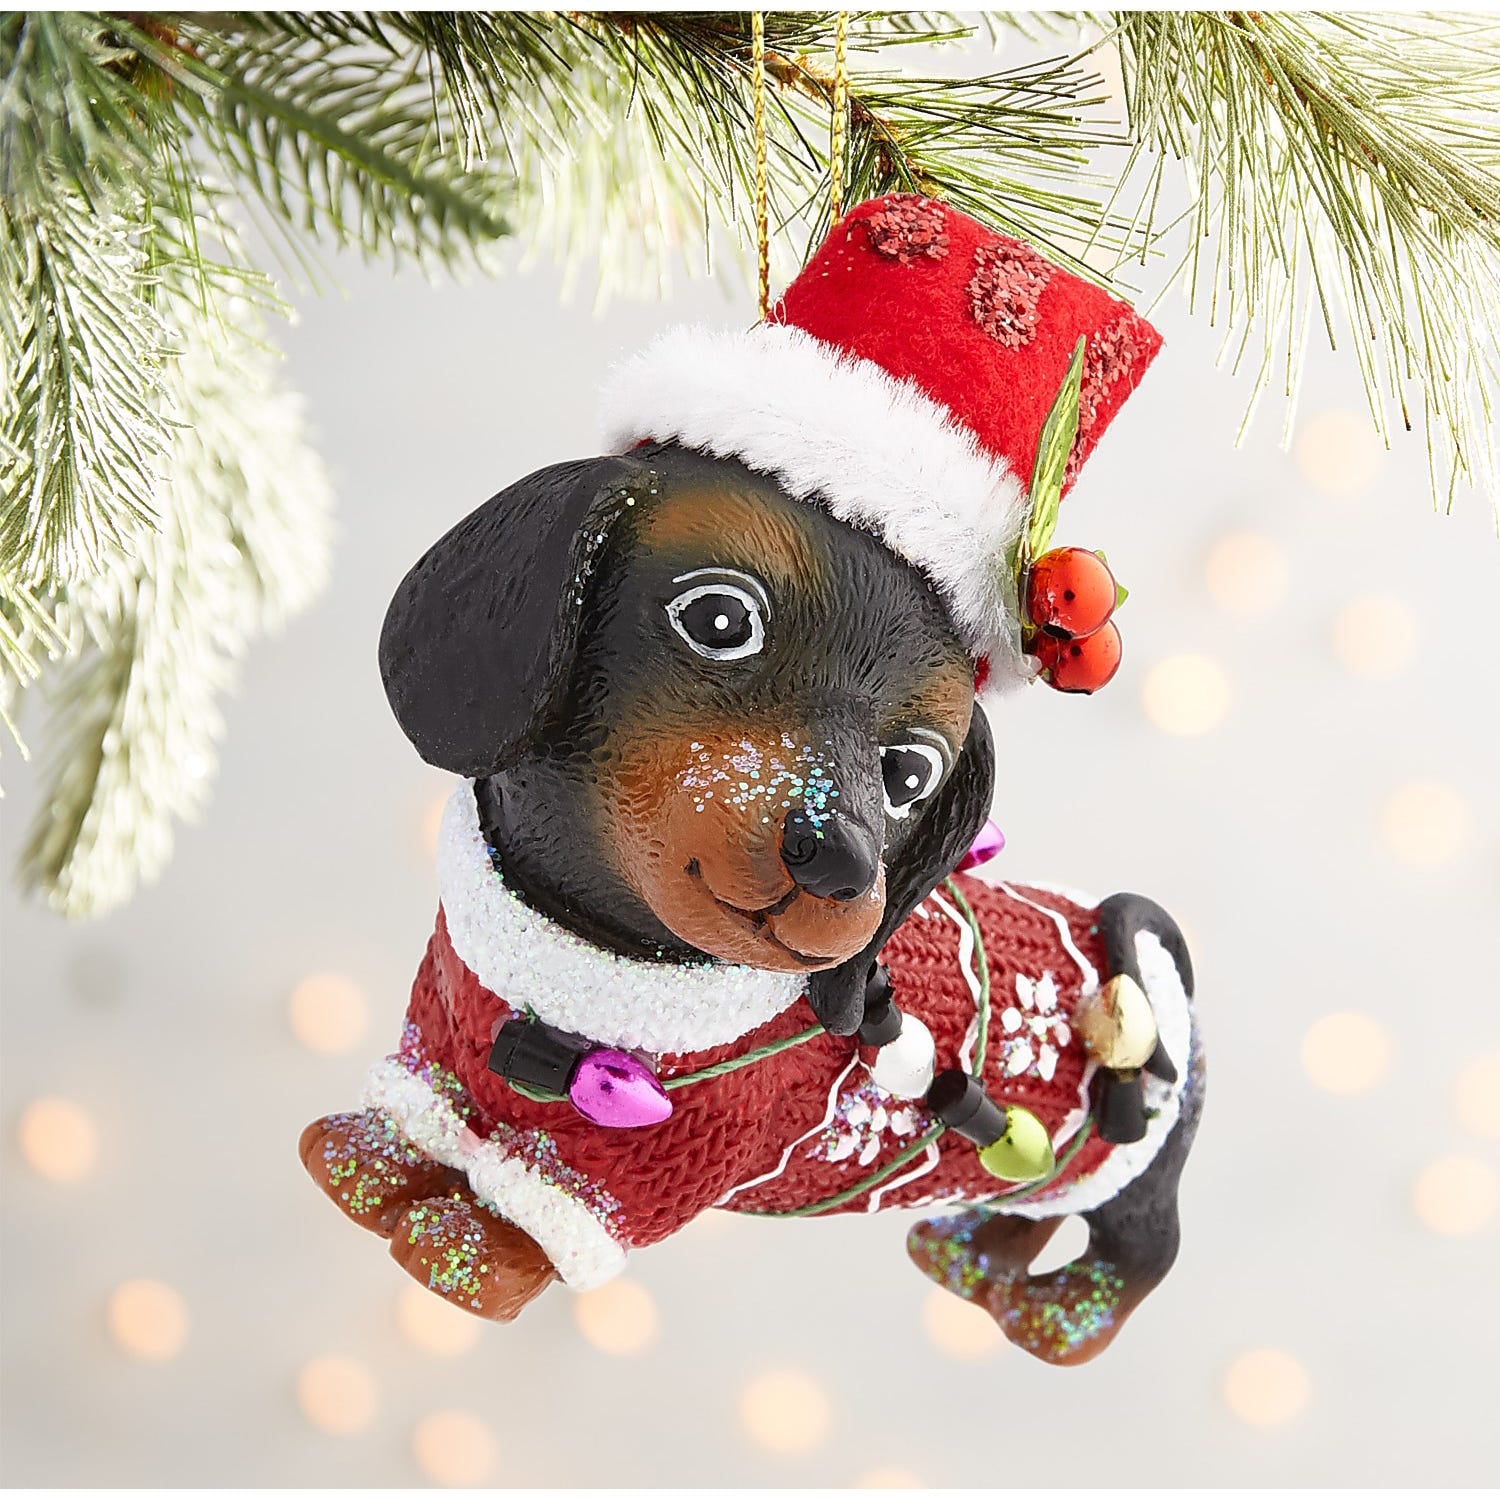 GERMAN SHEPHERD DOG IN PICK-UP TRUCK Christmas ornament 5.5" Kurt Adler A1940 